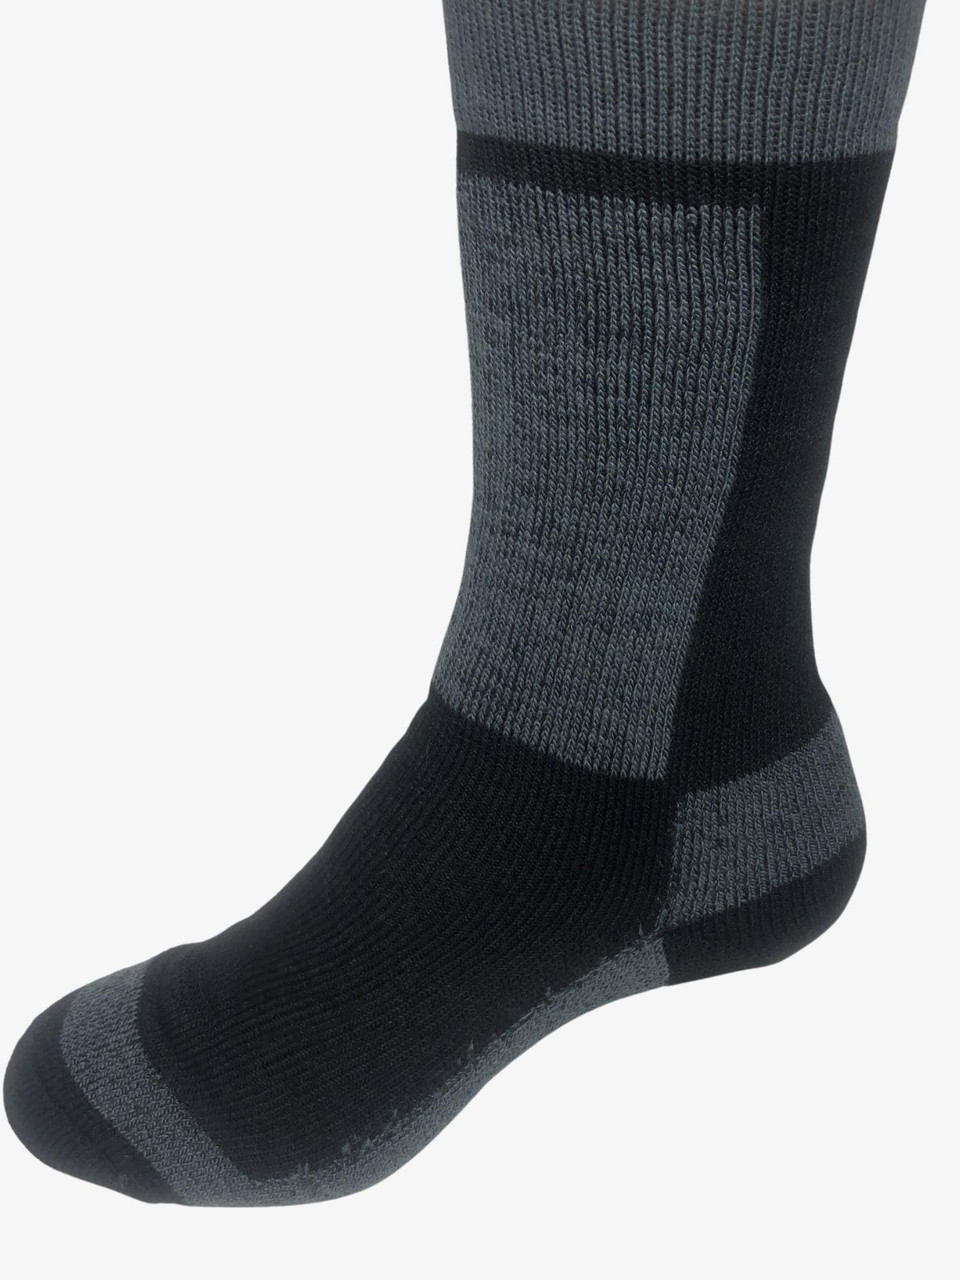 Extreme Merino blend Boot Sock NZNC - New Zealand Natural Clothing LTD